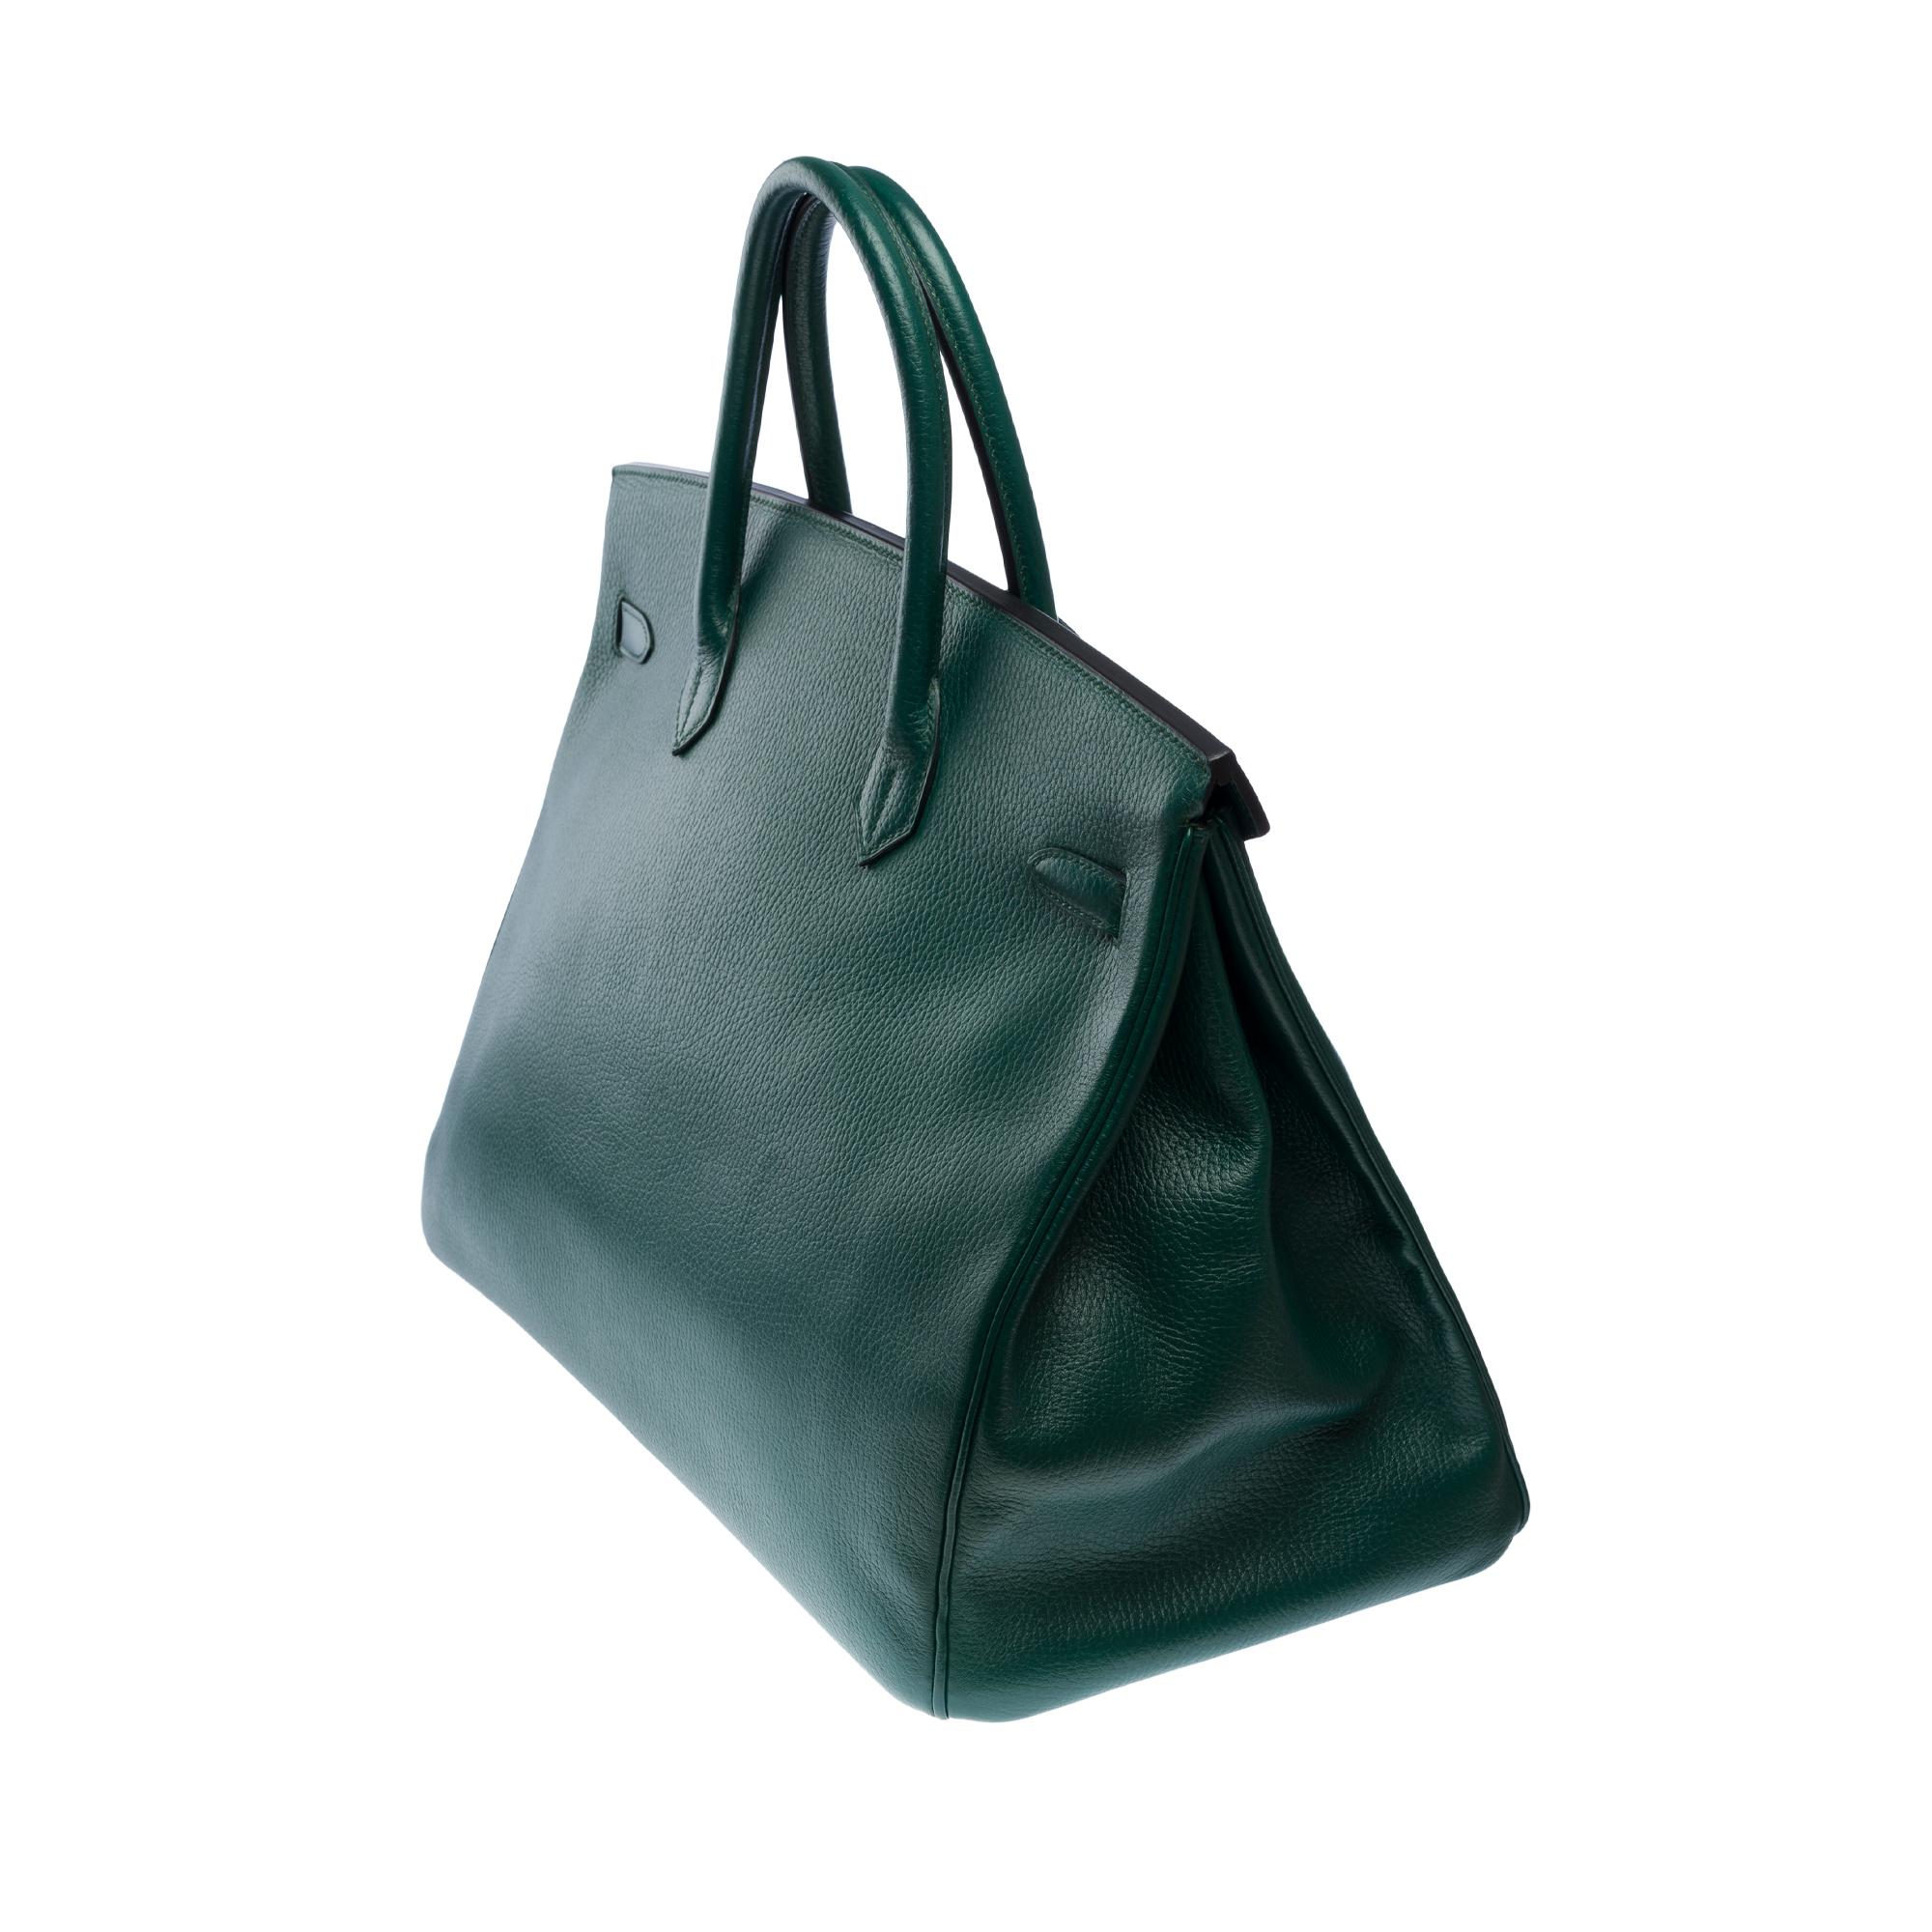 Women's or Men's Rare Hermes Birkin 40 handbag in Emerald Green Ardennes Calf leather, GHW